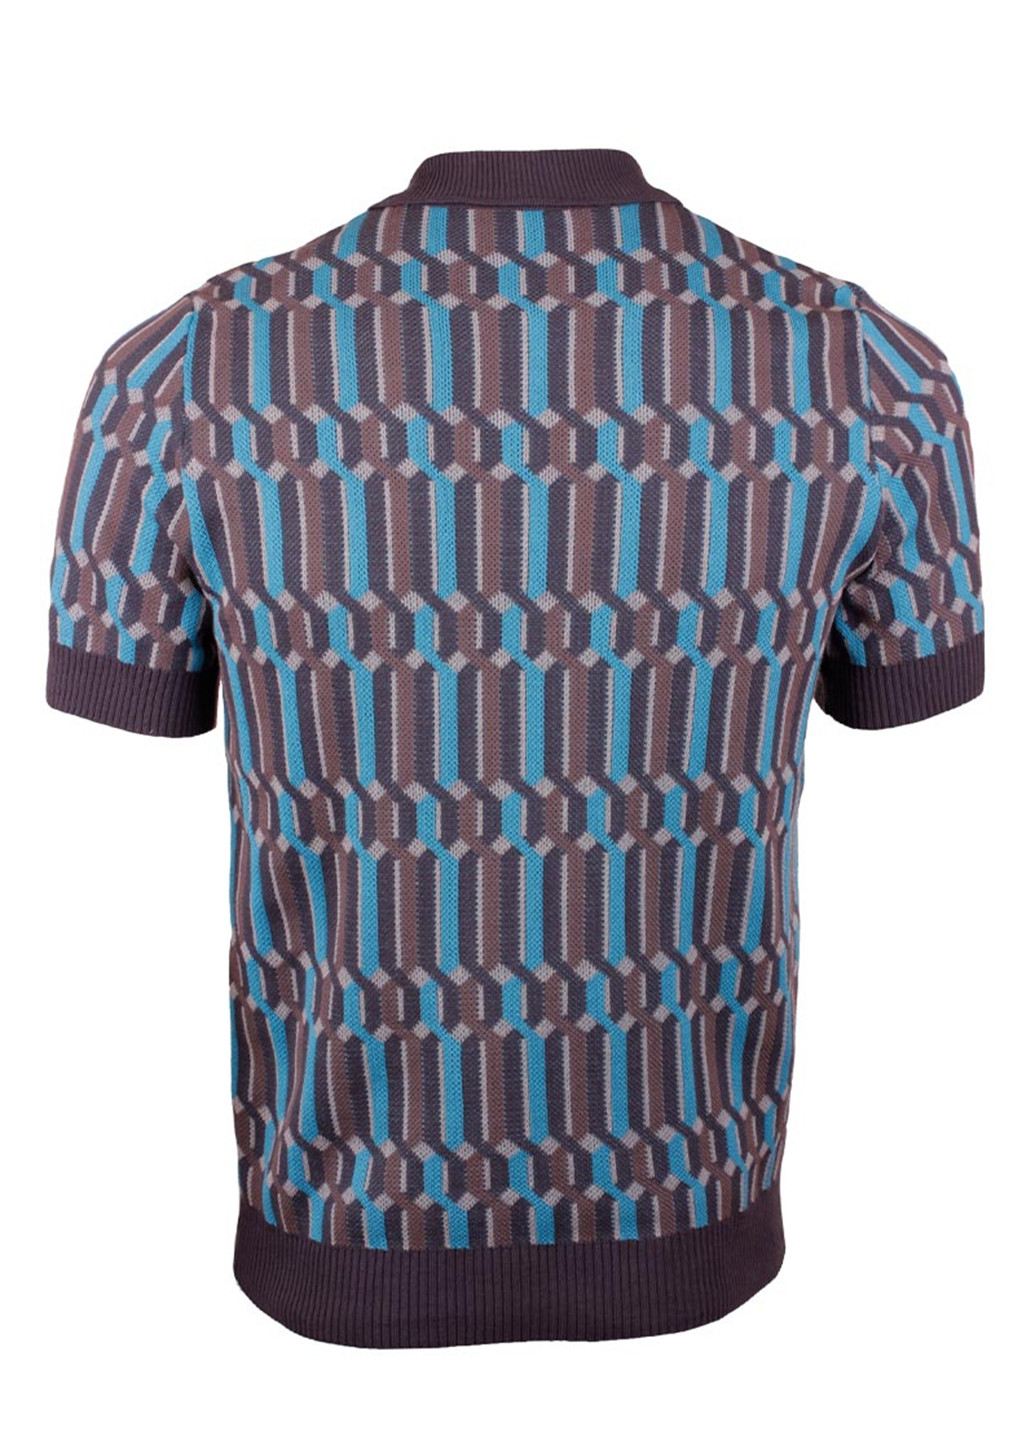 Коричневая футболка-поло для мужчин VD One с геометрическим узором